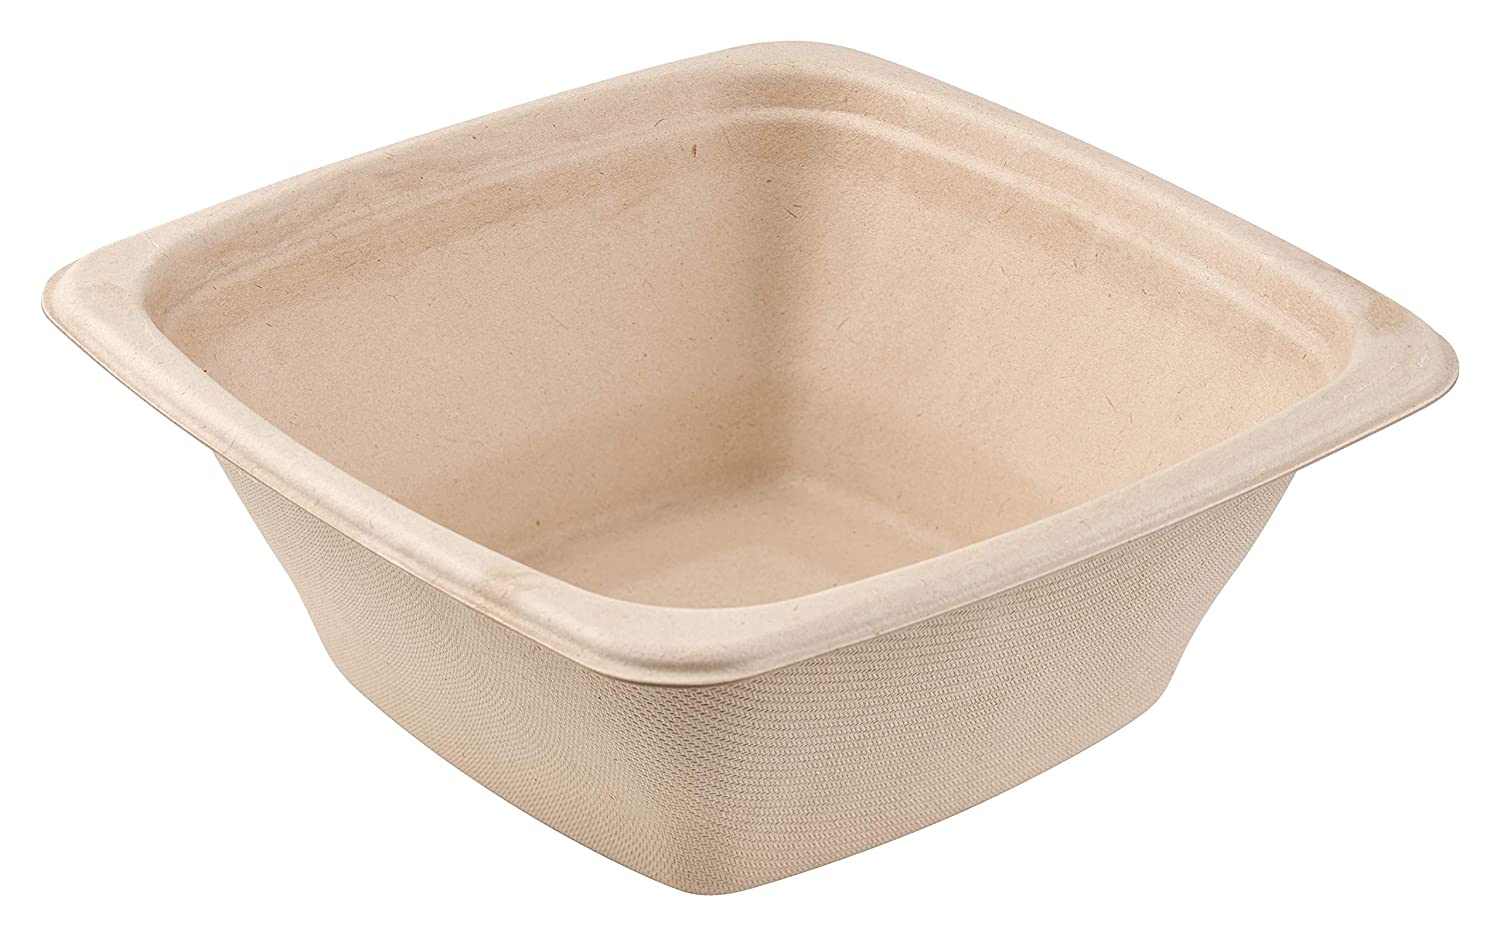 32oz Eco Friendly Disposable Square Bowls Compostable Container